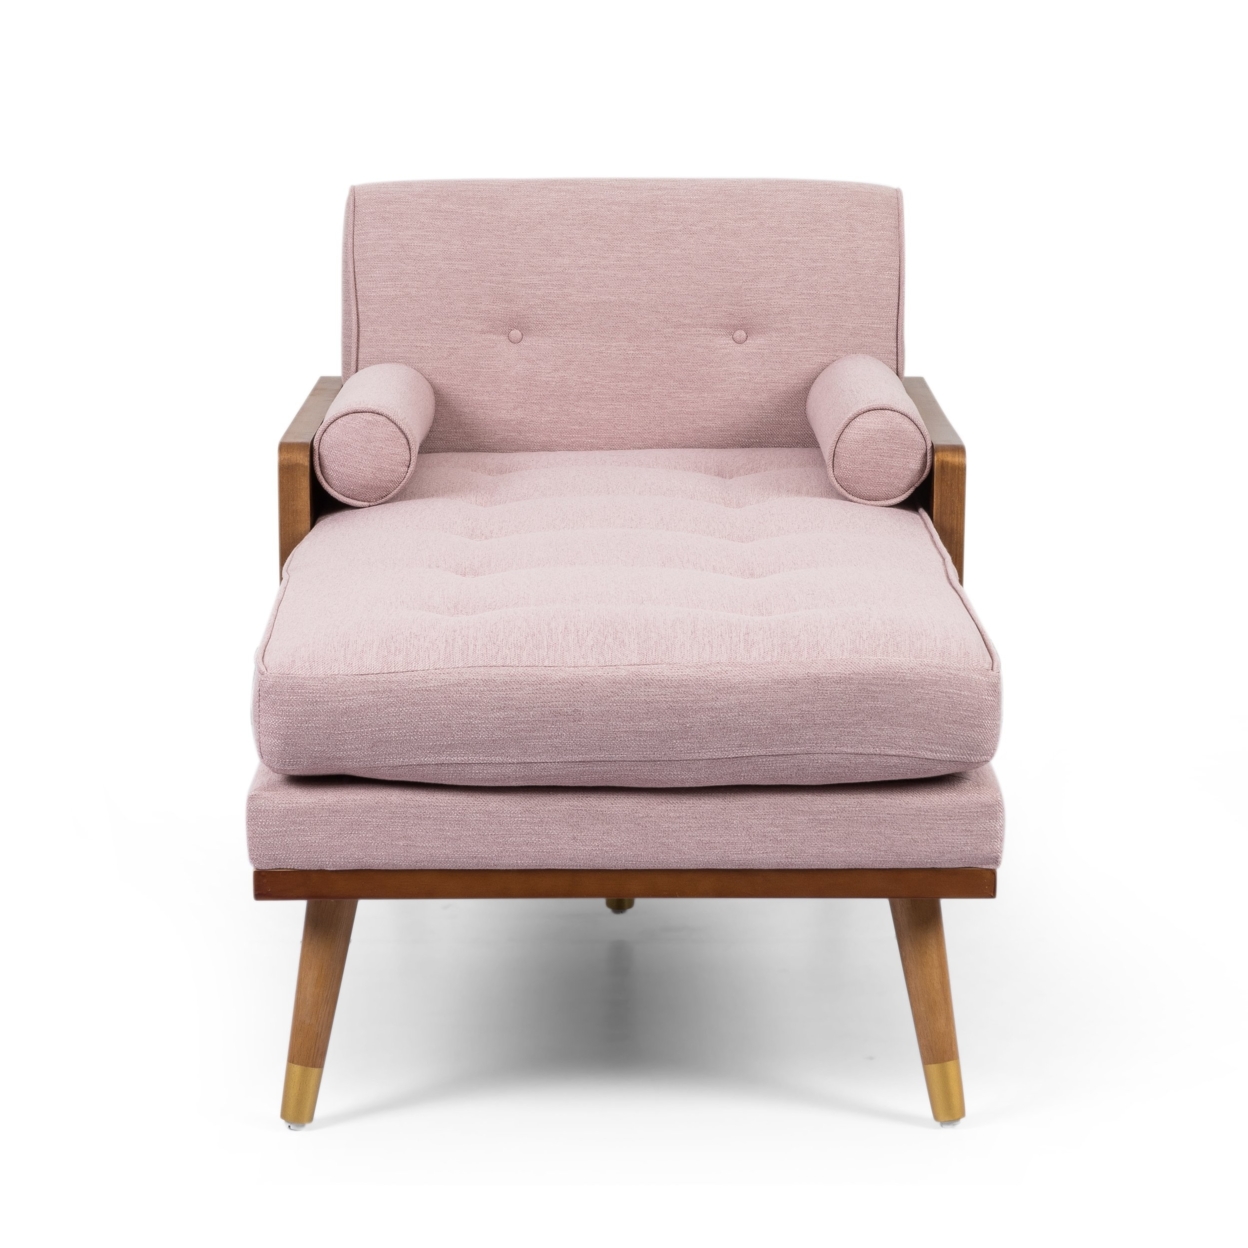 Pareesa Mid-Century Modern Fabric Chaise Lounge - Light Blush